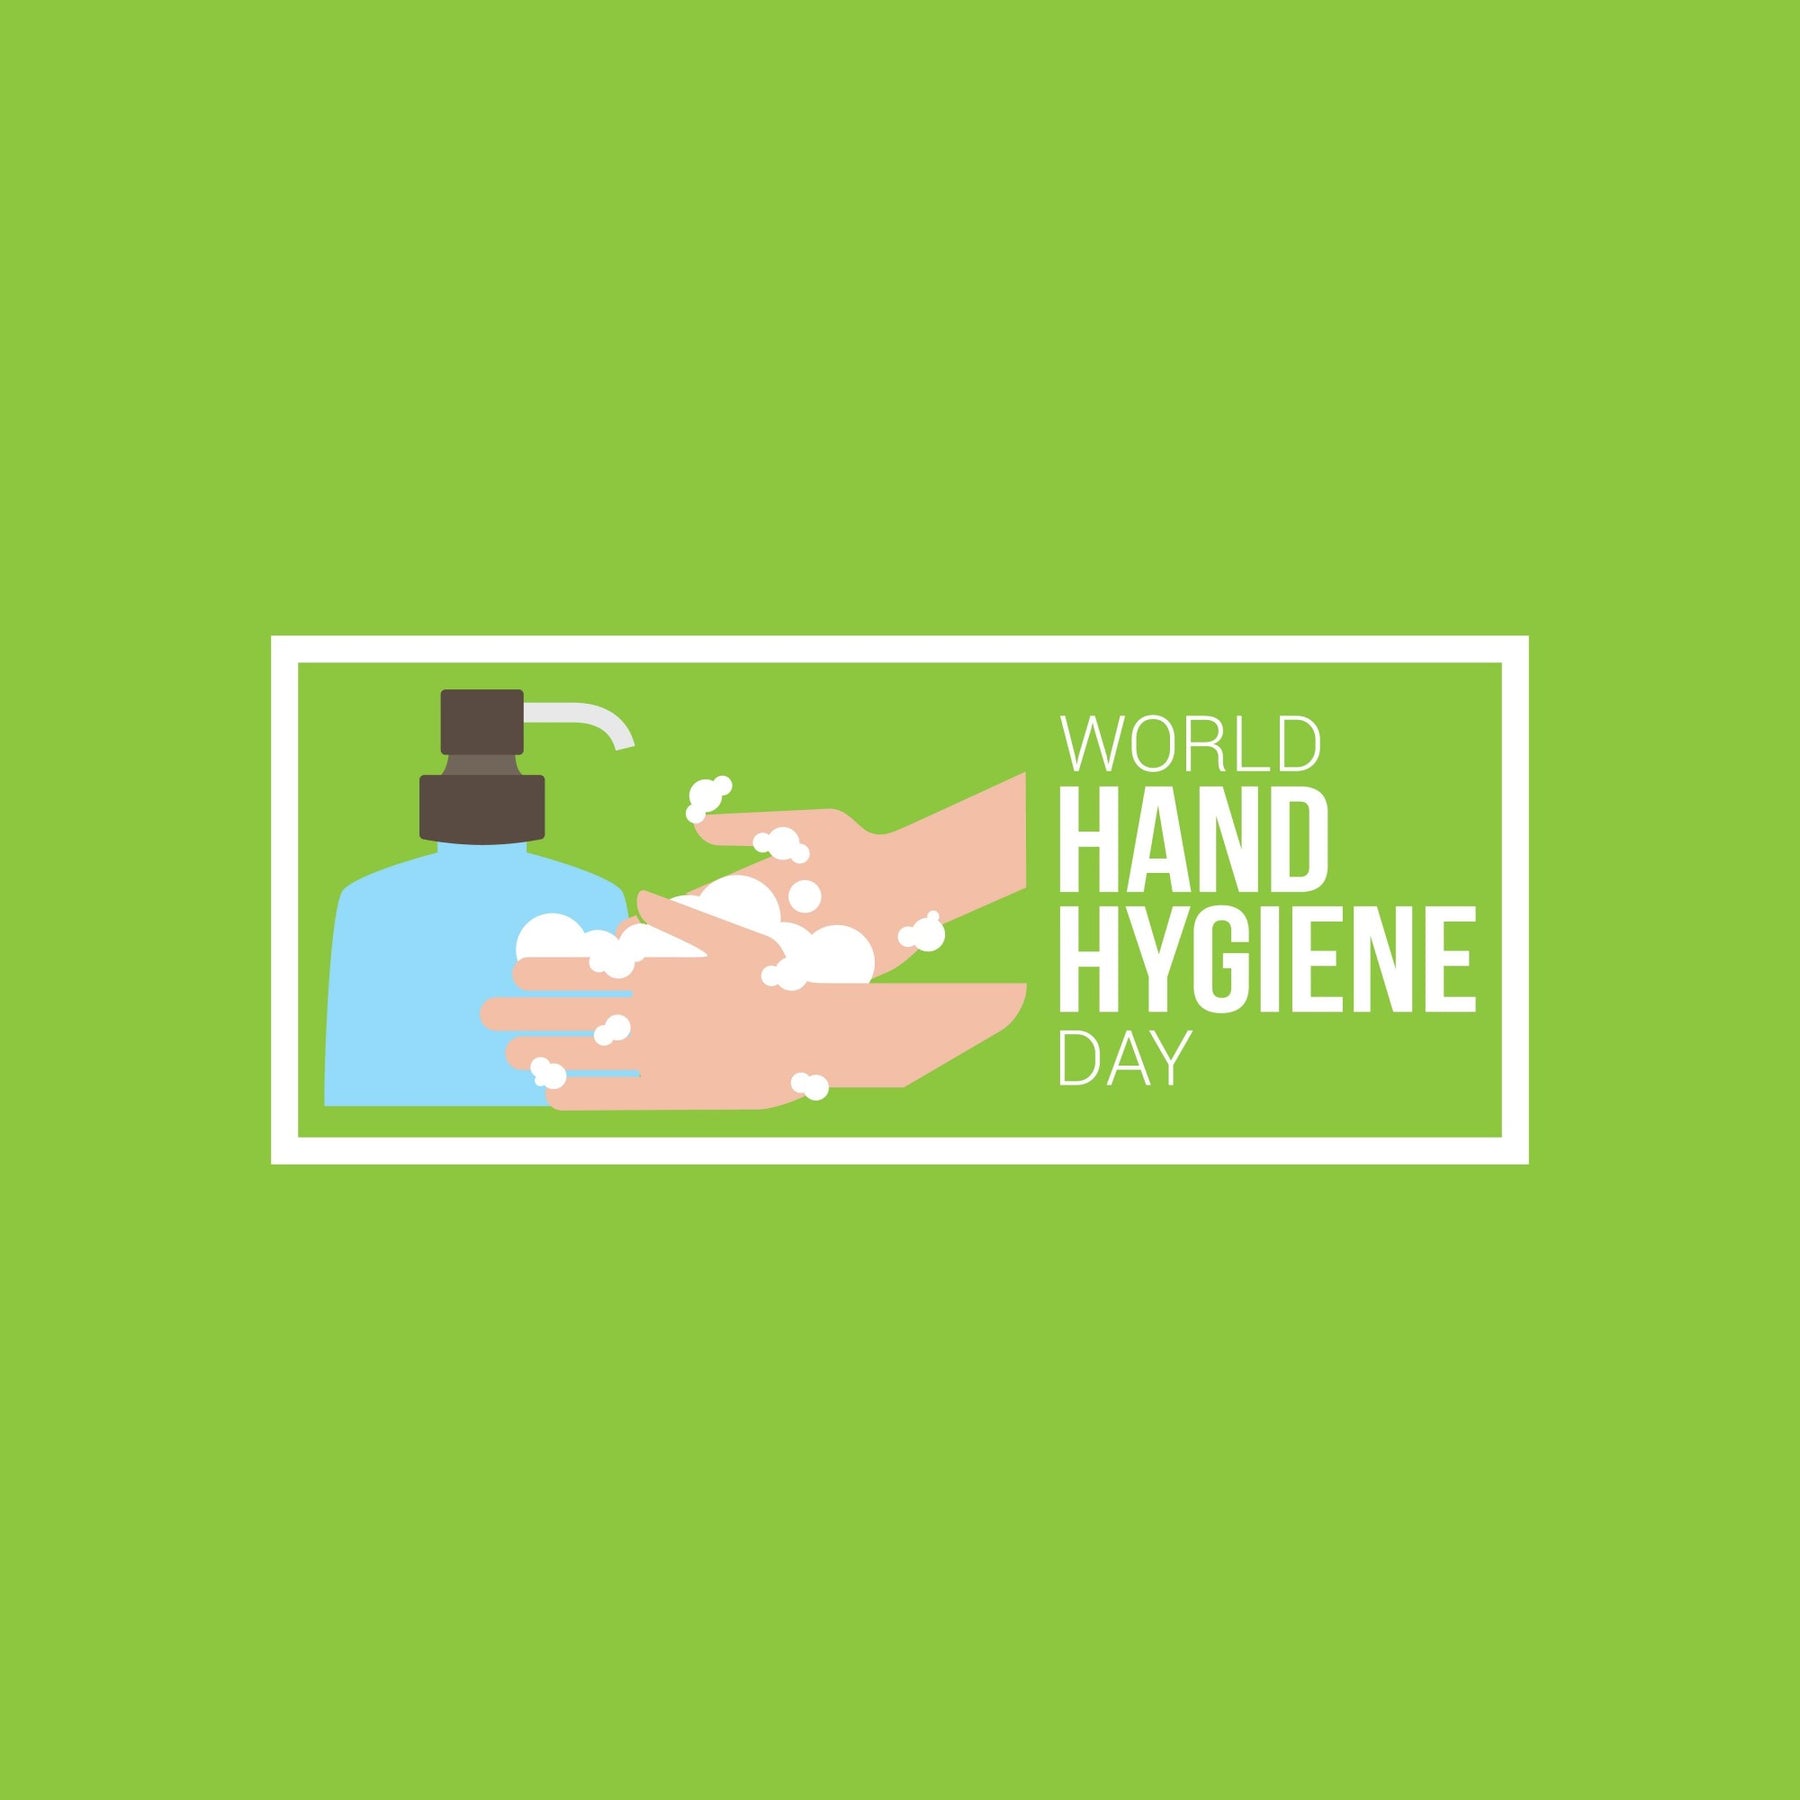 World Hand Hygiene Day: Clean Hands Save Lives